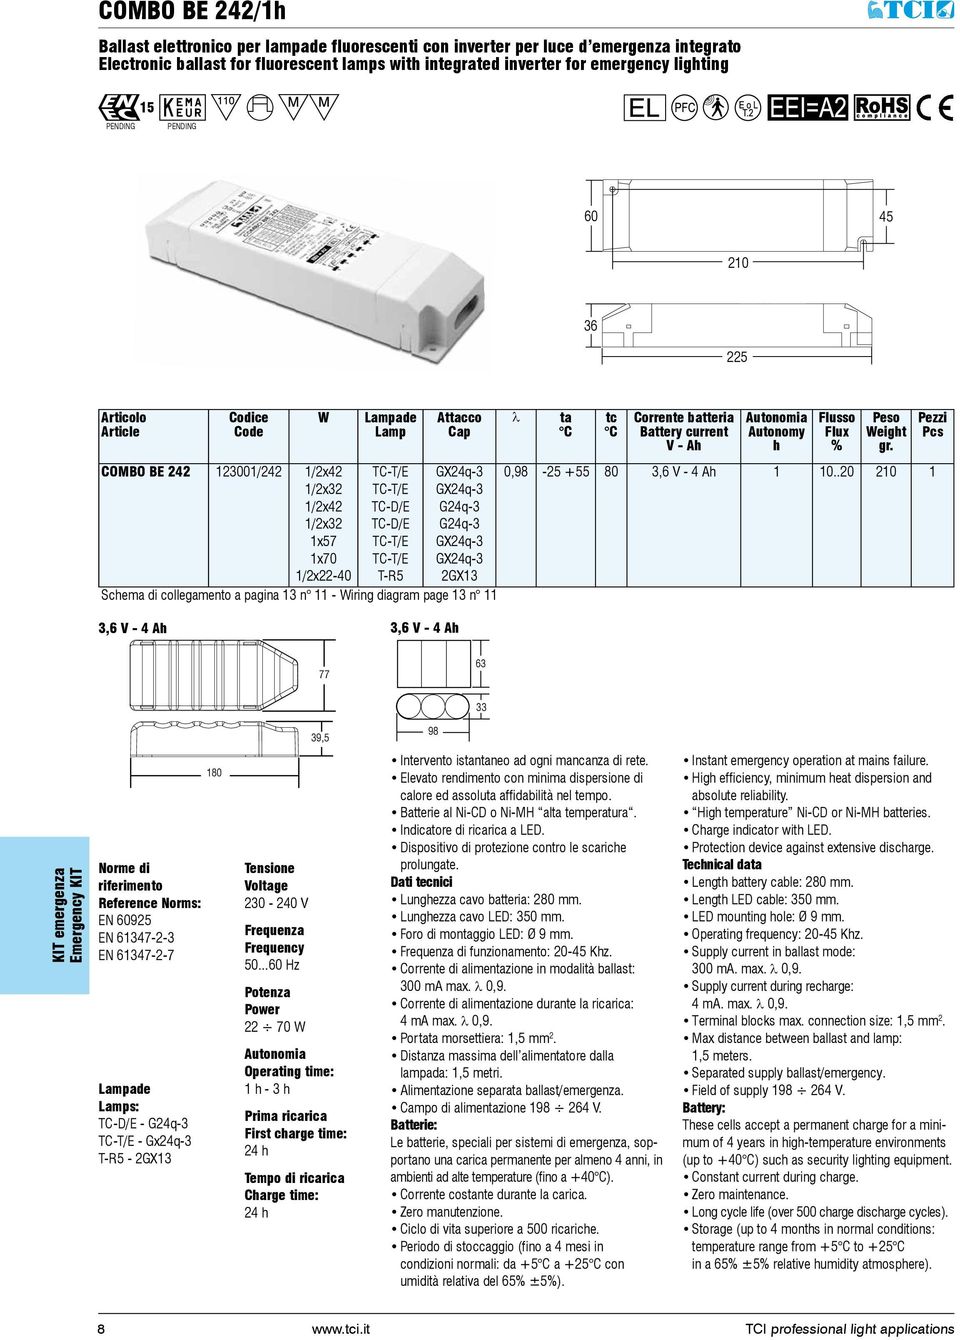 GX24q-3 2GX13 Schema di collegamento a pagina 13 n 11 - Wiring diagram page 13 n 11 l ta tc Corrente batteria Battery current V - Ah Autonomy h Flusso Flux % Peso Weight gr.